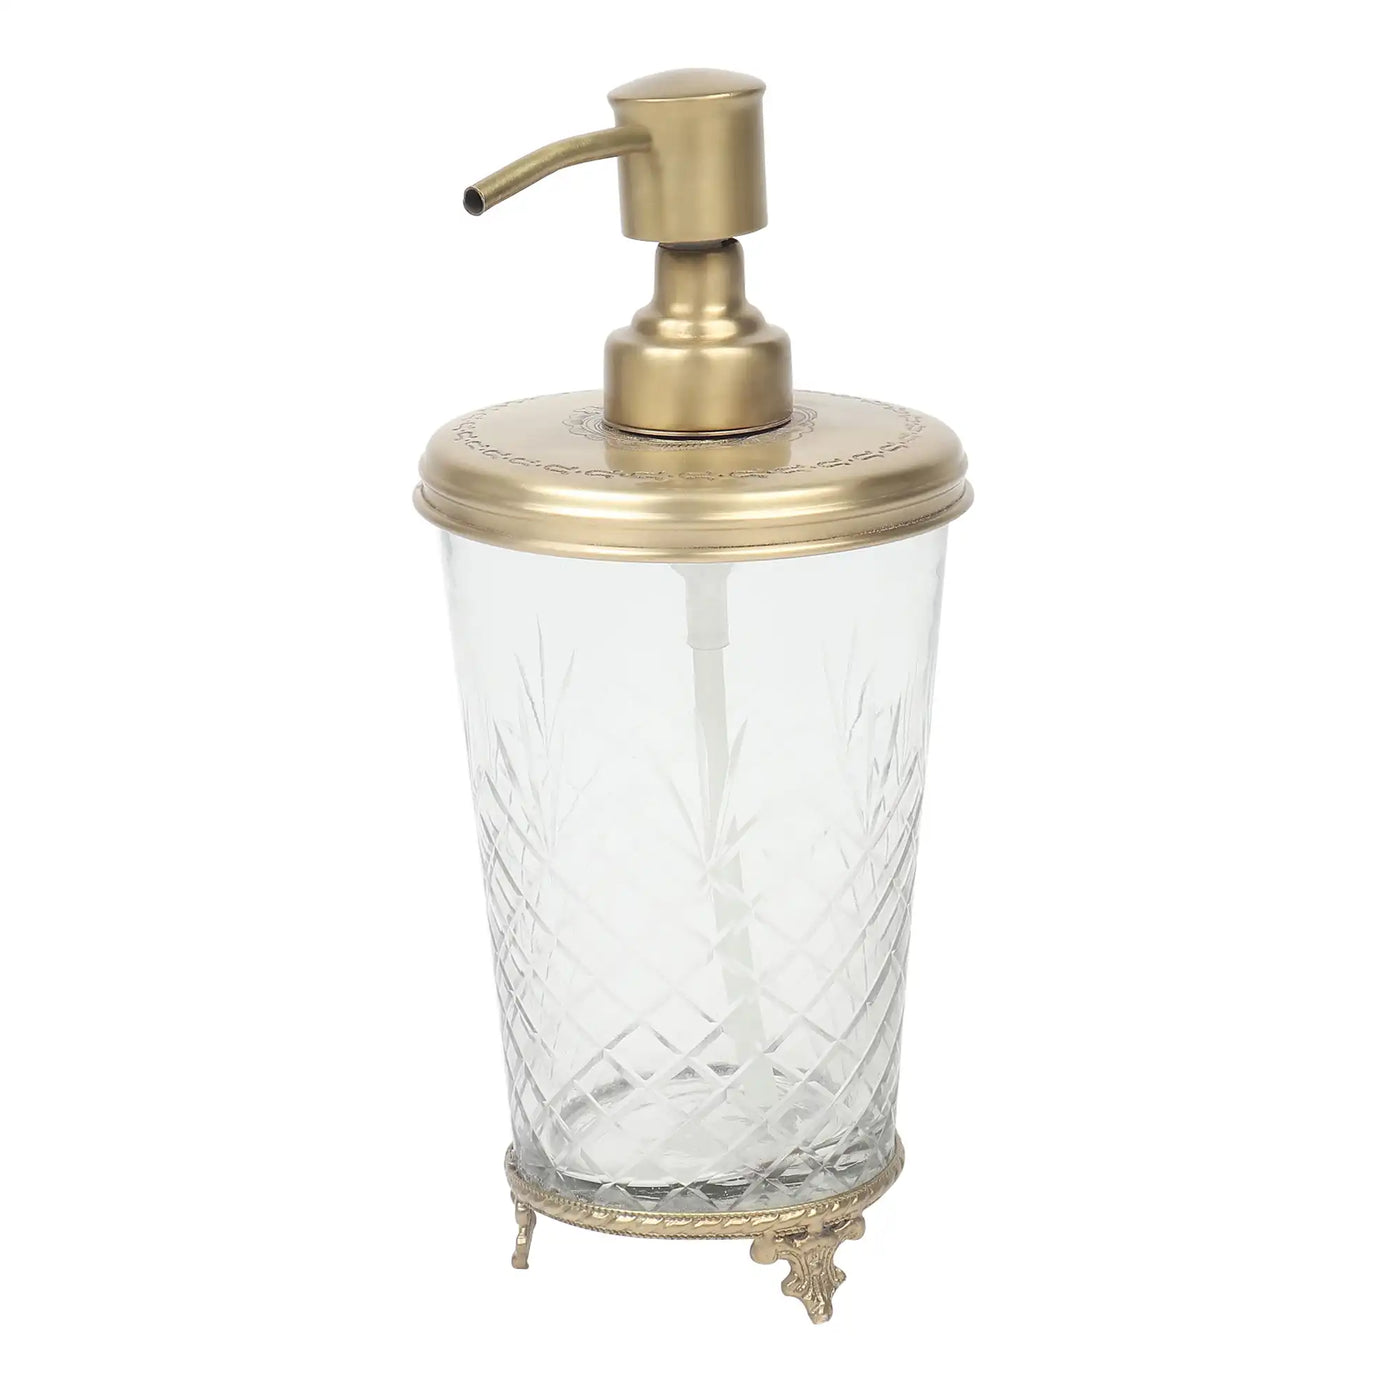 Vintage Brass & Glass Soap Dispenser Gold 80-047-21